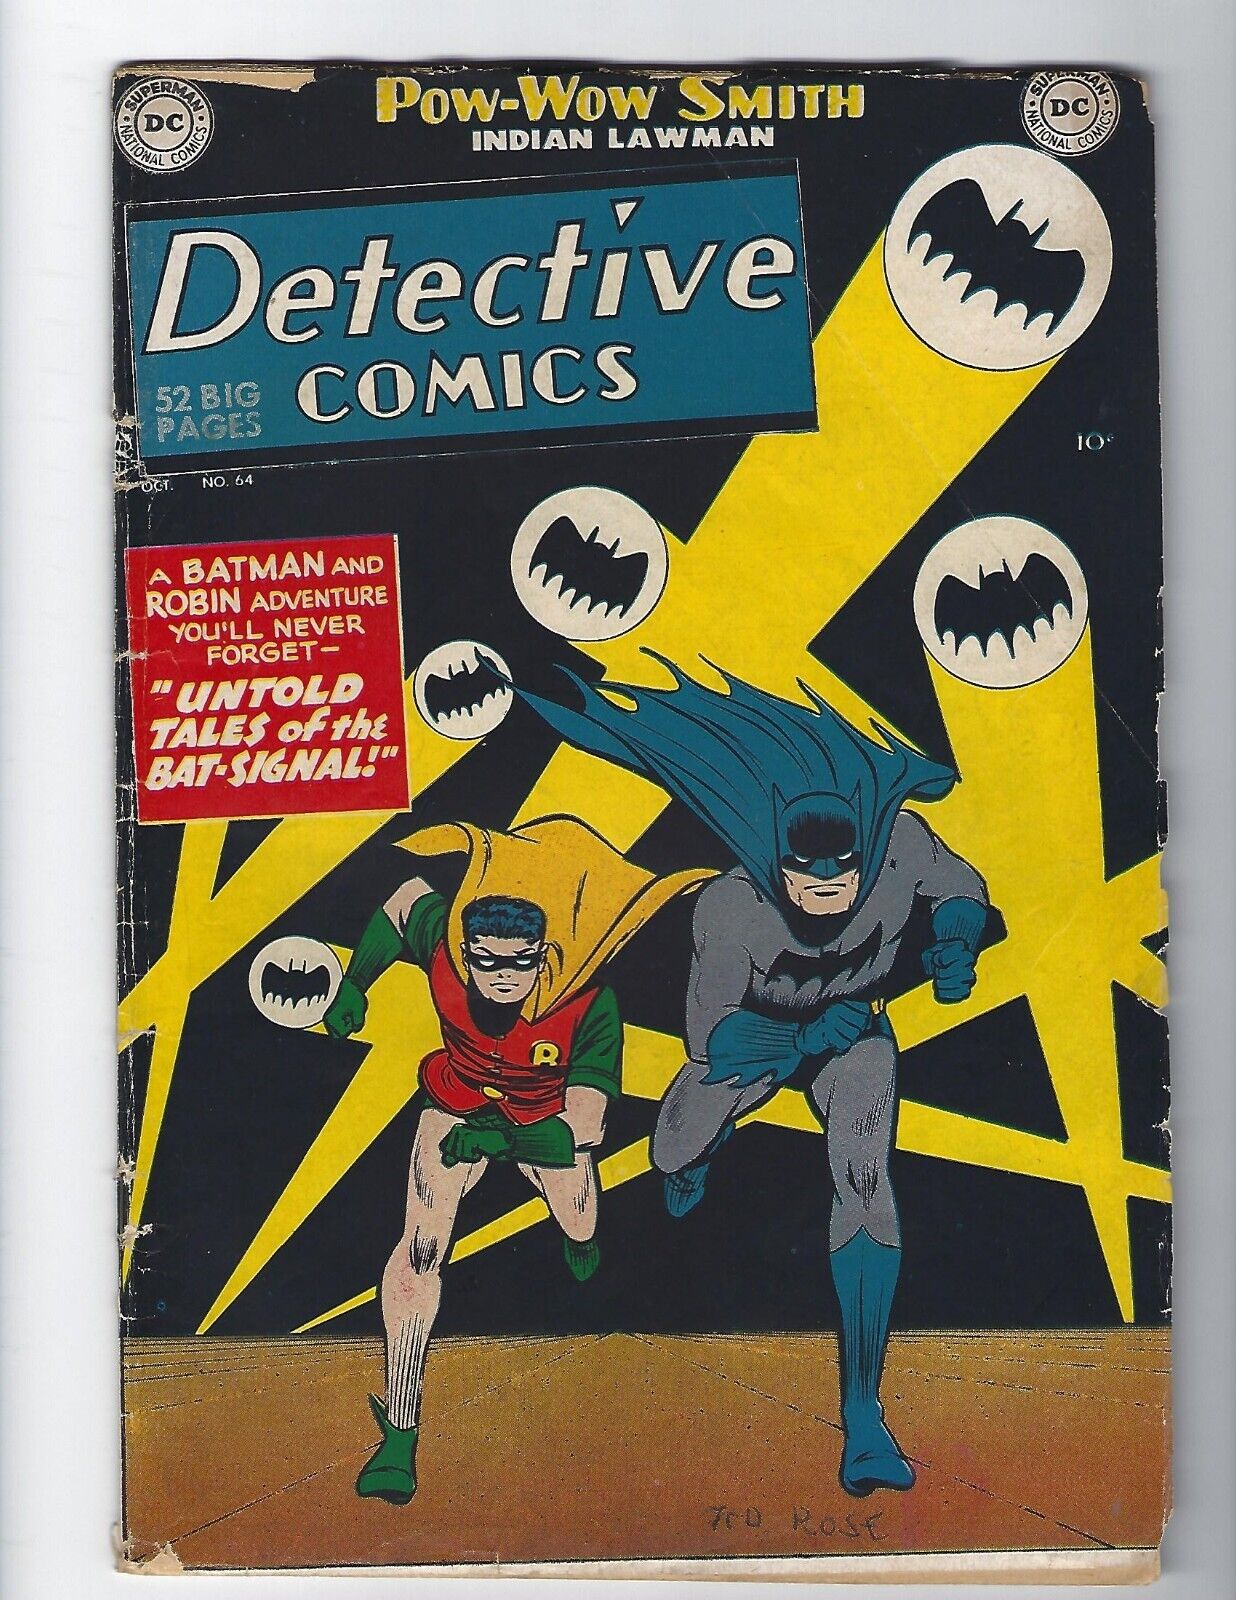 DETECTIVE COMICS #164 - GD/VG 3.0 - COOL BAT-SIGNAL CVR - 1942 BATMAN - $429 BIN